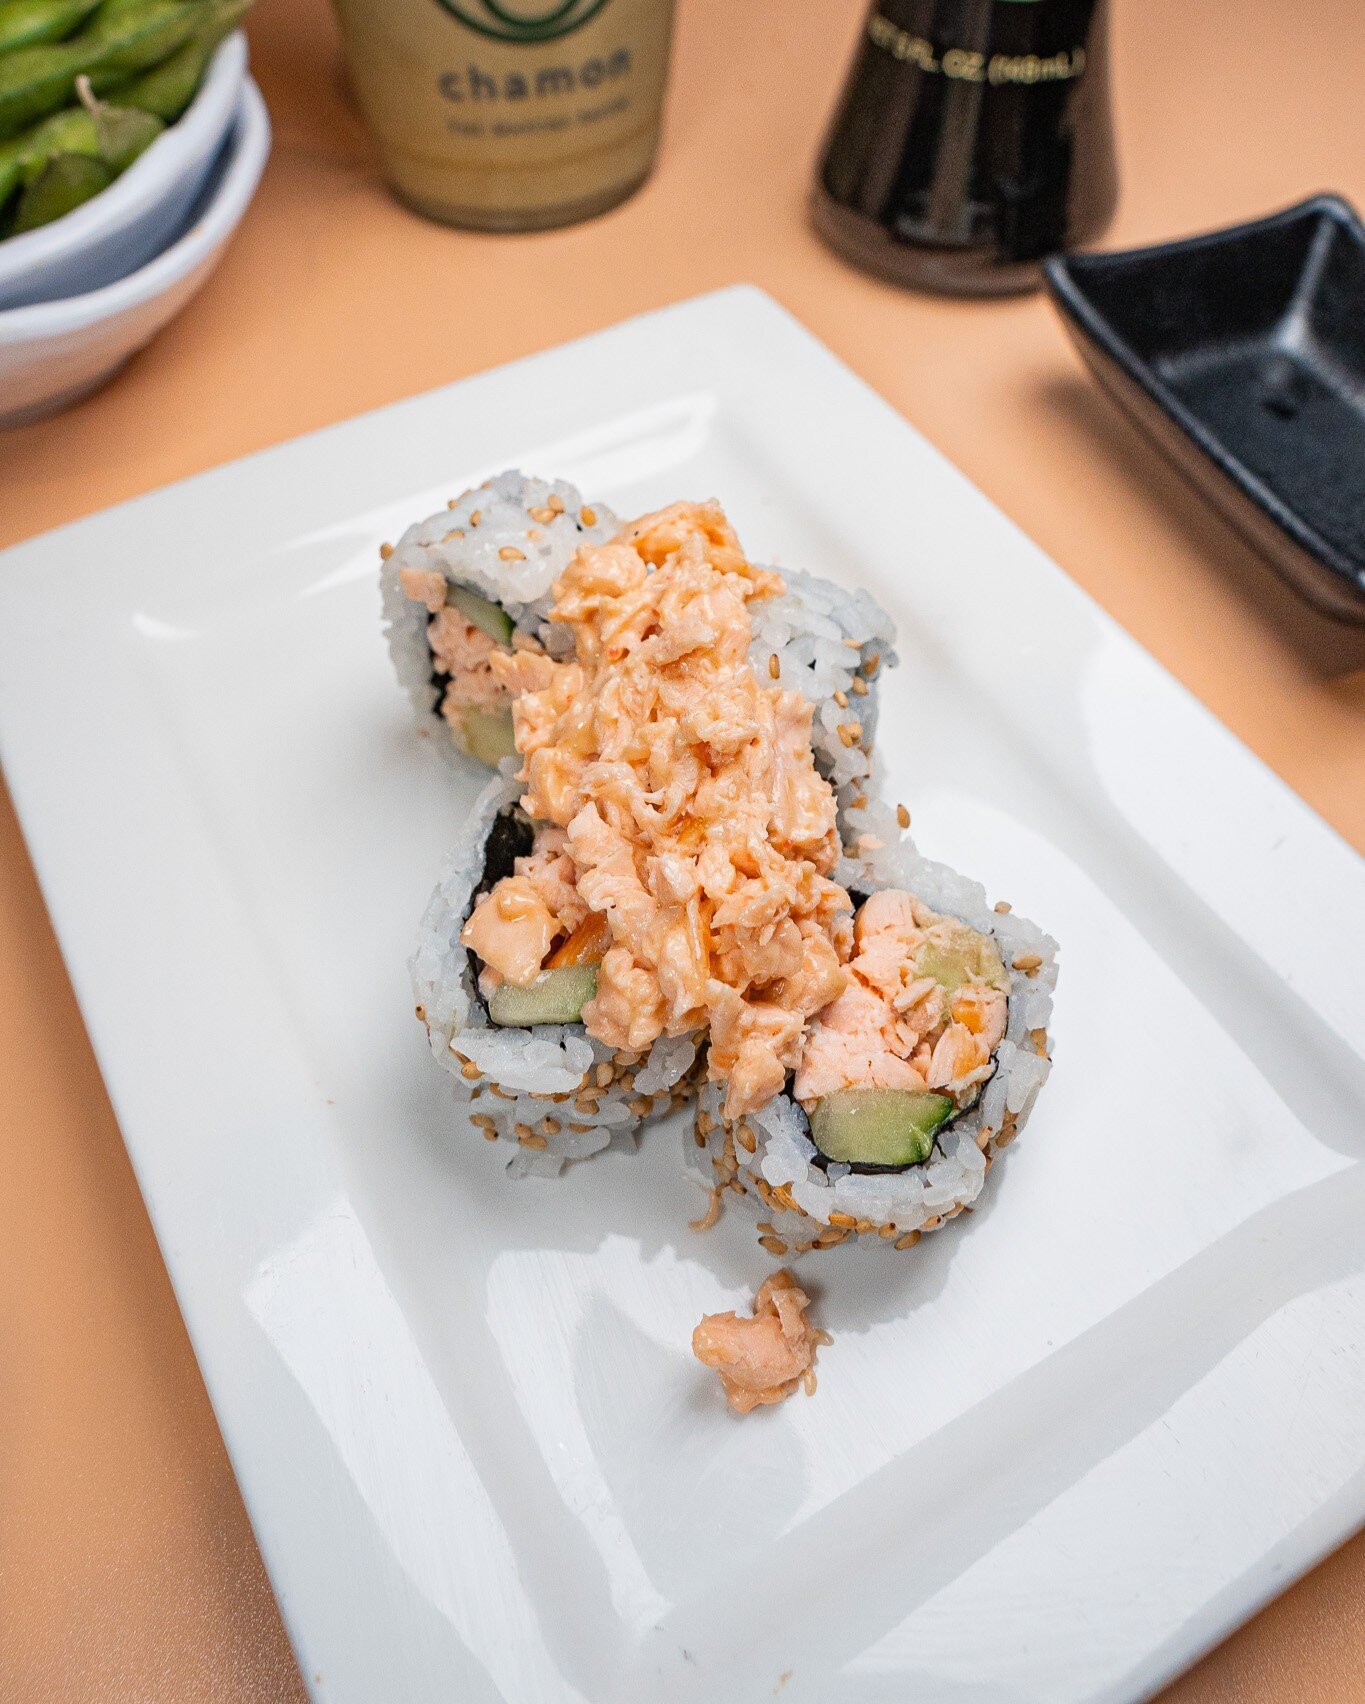 Roll into flavor paradise with these sushi delights. Pure bliss on a plate! Visit us today! #UmamiJourney 😋🥢 

◾️◽️◾️◽️◾️◽️◾️◽️◾️◽️ 
🍣 𝗔𝗬𝗖𝗘 𝗦𝗨𝗦𝗛𝗜 𝗛𝗢𝗨𝗦𝗘 𝗚𝗢𝗬𝗘𝗠𝗢𝗡 
⏰ ᴅᴀɪʟʏ: 12:00 ᴘᴍ - 11:00 ᴘᴍ 
⏰ ʟᴀꜱᴛ ꜱᴇᴀᴛɪɴɢ ꜰᴏʀ ᴀʏᴄᴇ 10ᴘᴍ 
⏰ ʟᴀꜱ